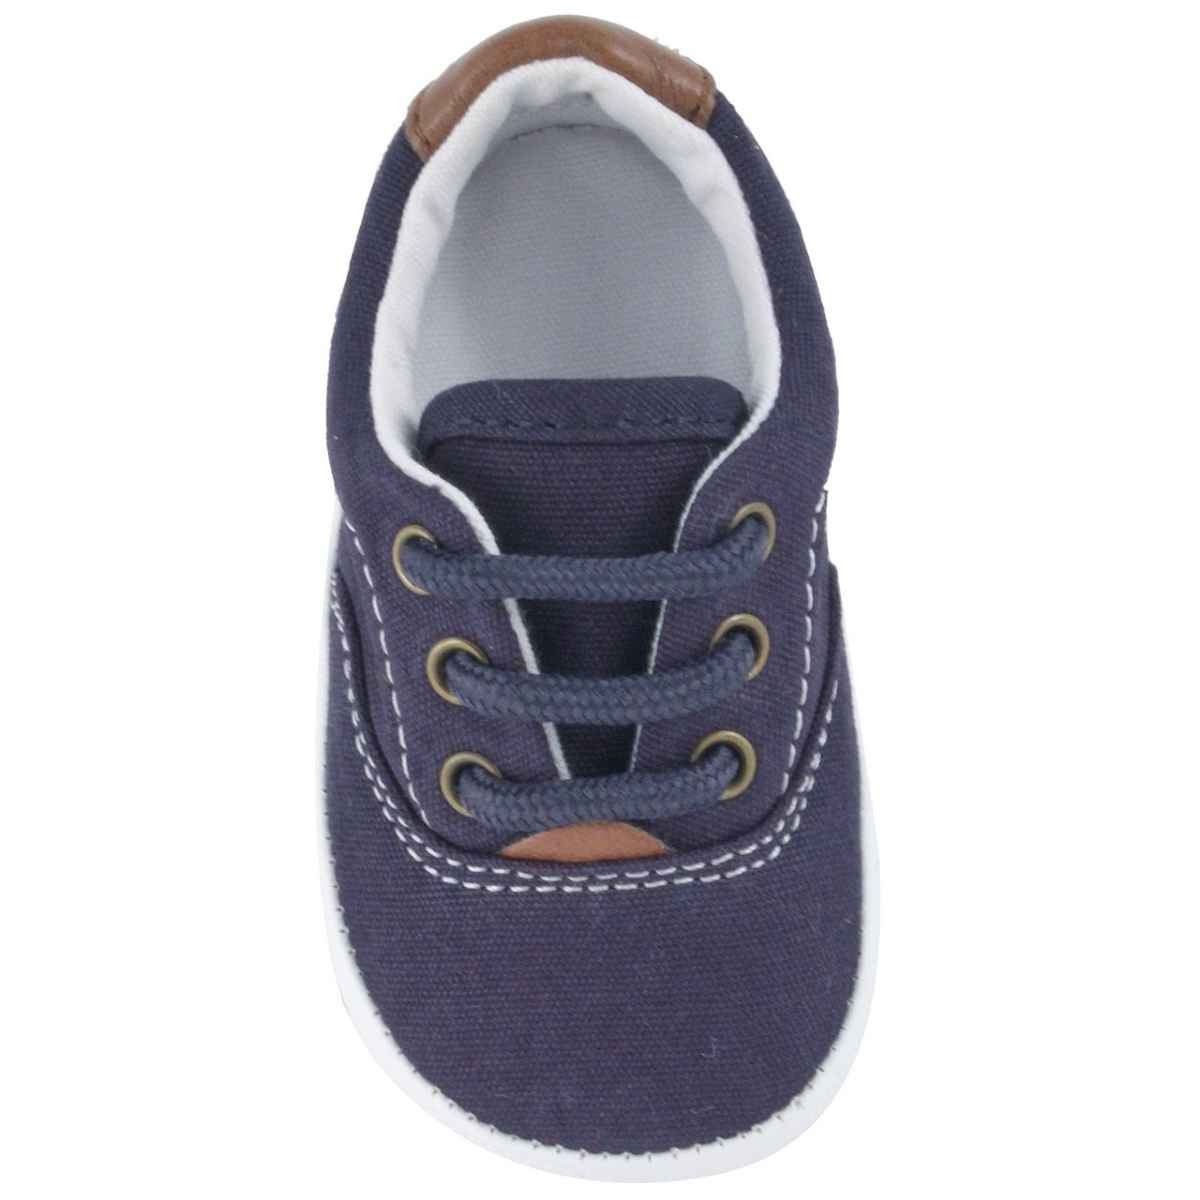 Milo Navy Canvas Baby Sneakers - Kids Shoe Box